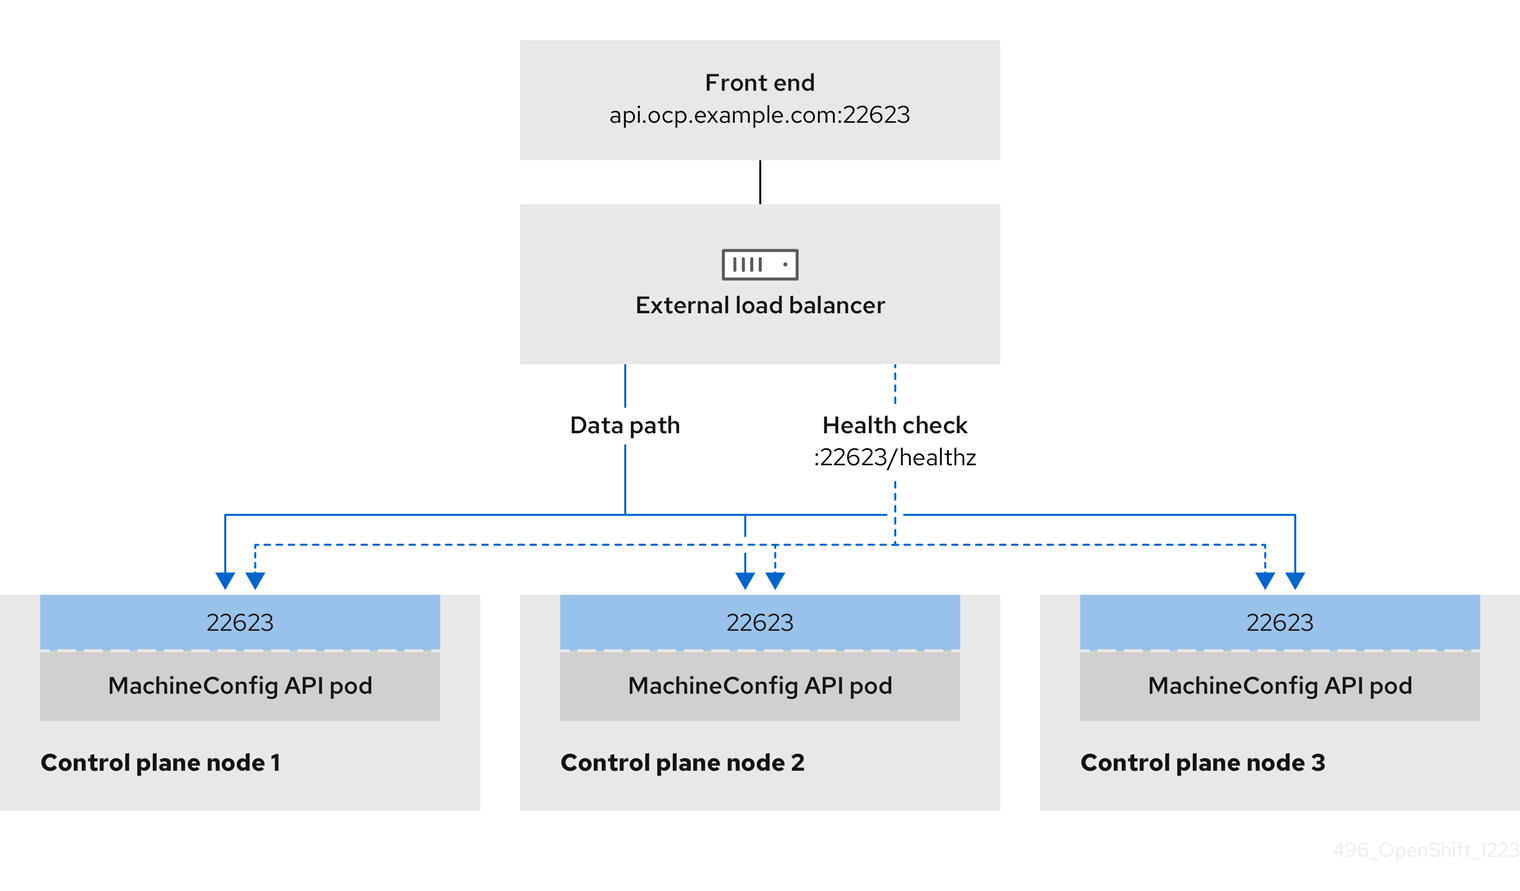 OpenShift Container Platform 環境で動作する OpenShift MachineConfig API のネットワークワークフローの例を示すイメージ。